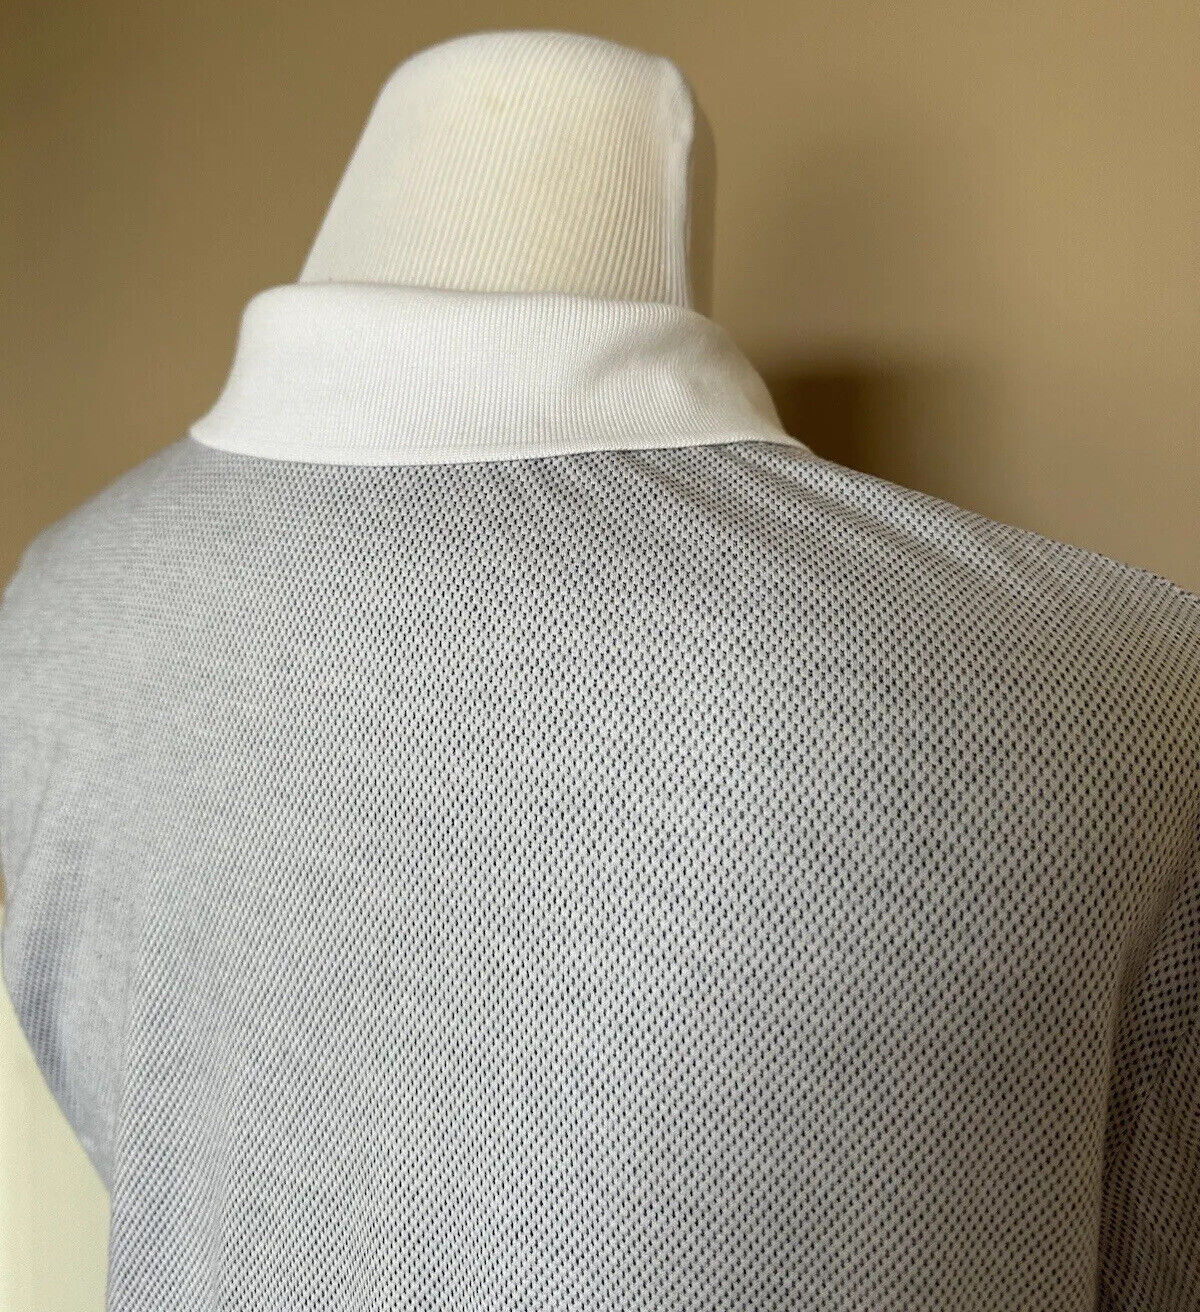 Бело-синяя рубашка-поло с короткими рукавами Boss Hugo Boss Black Label L (подходит как SM)